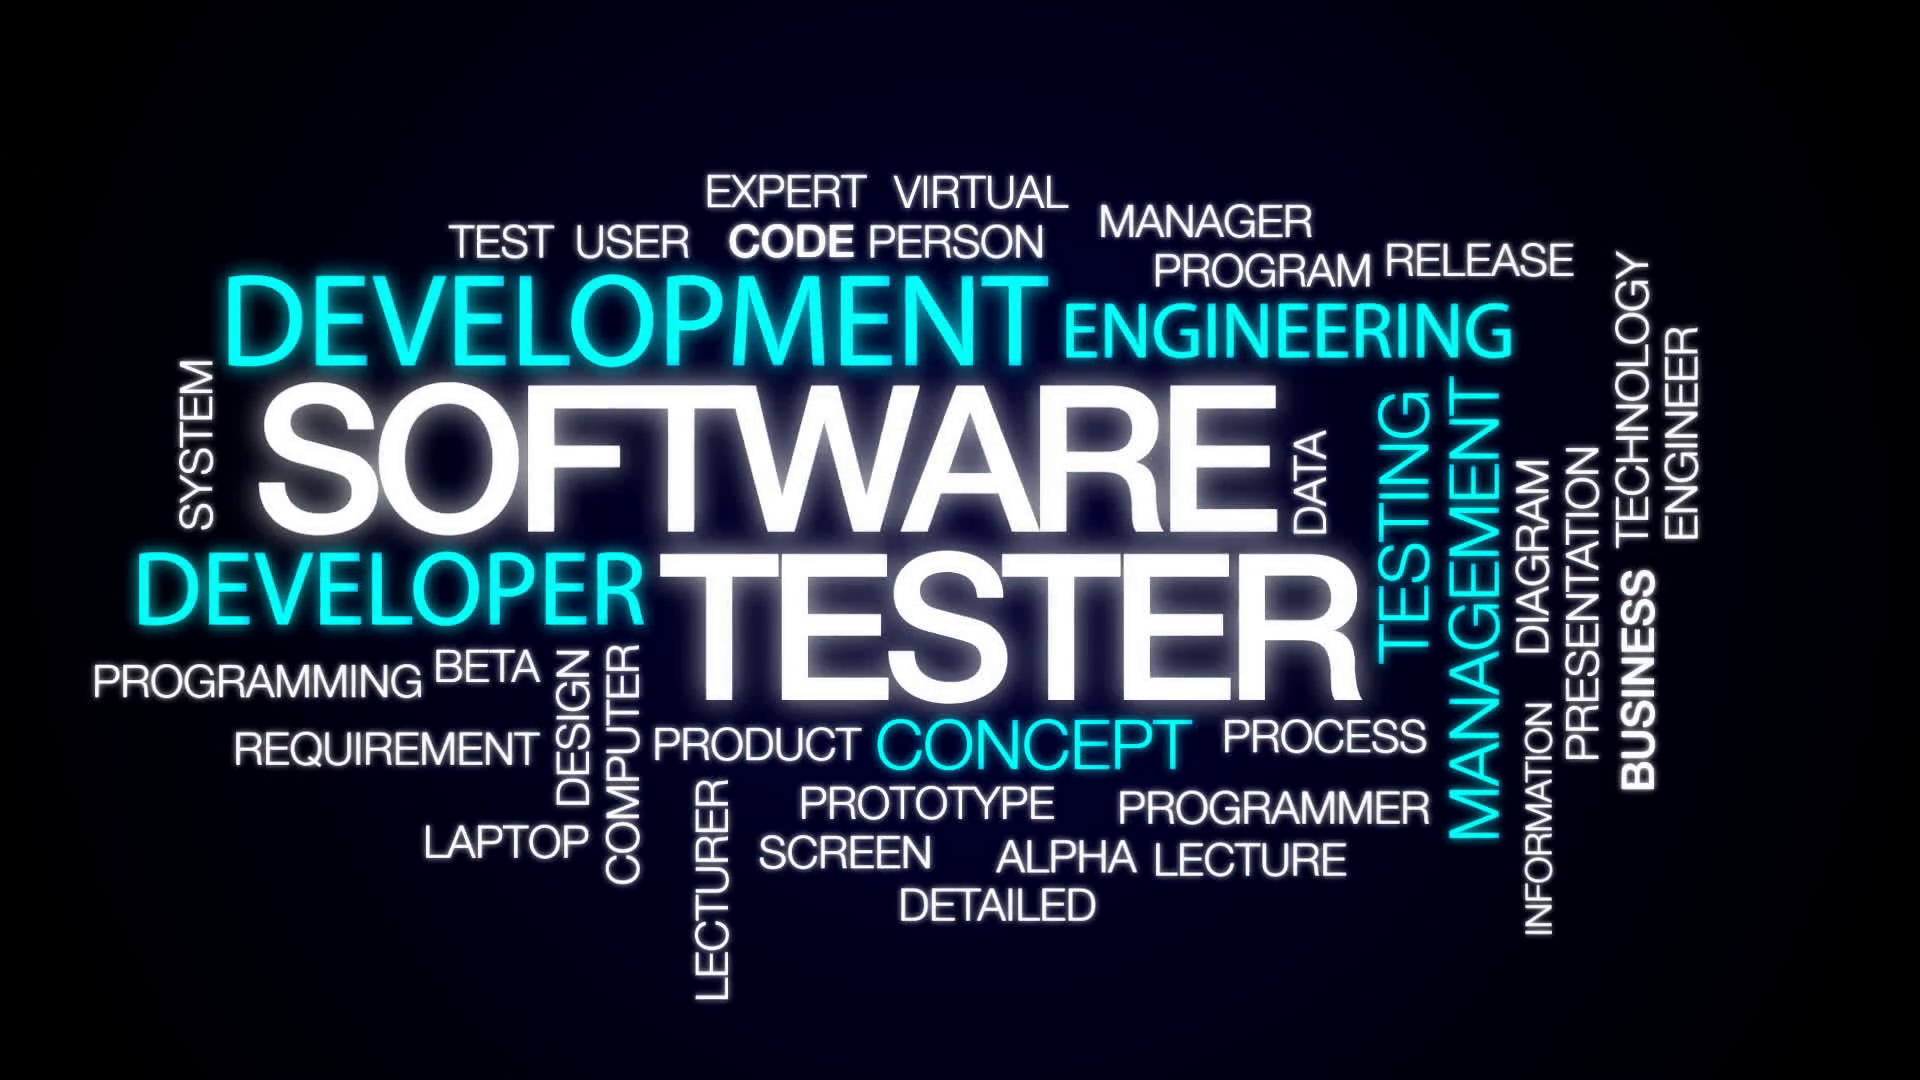 Best wallpapers for software developers, by Developer Kafasi